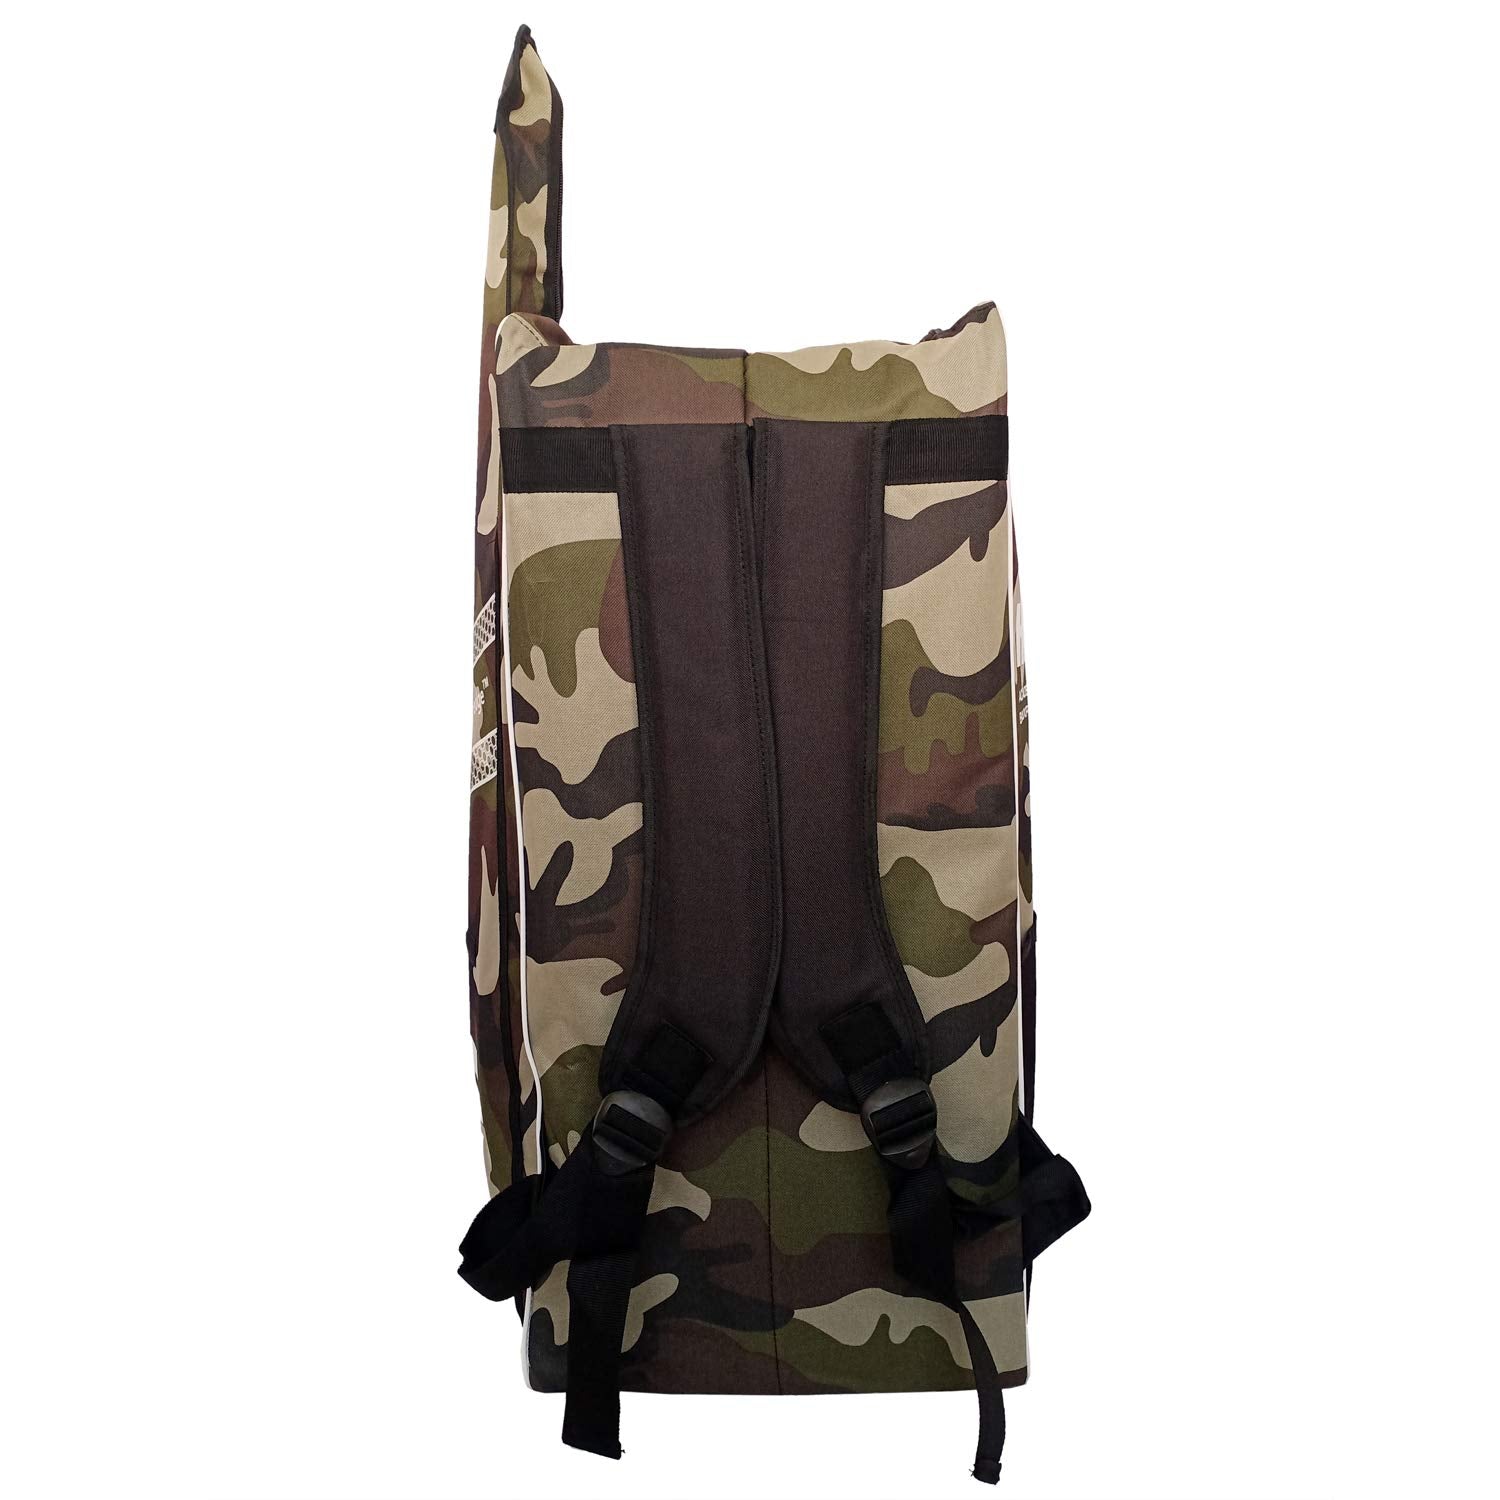 HRS Backpack Style Cricket Kit Bag - Camouflage Black - Best Price online Prokicksports.com